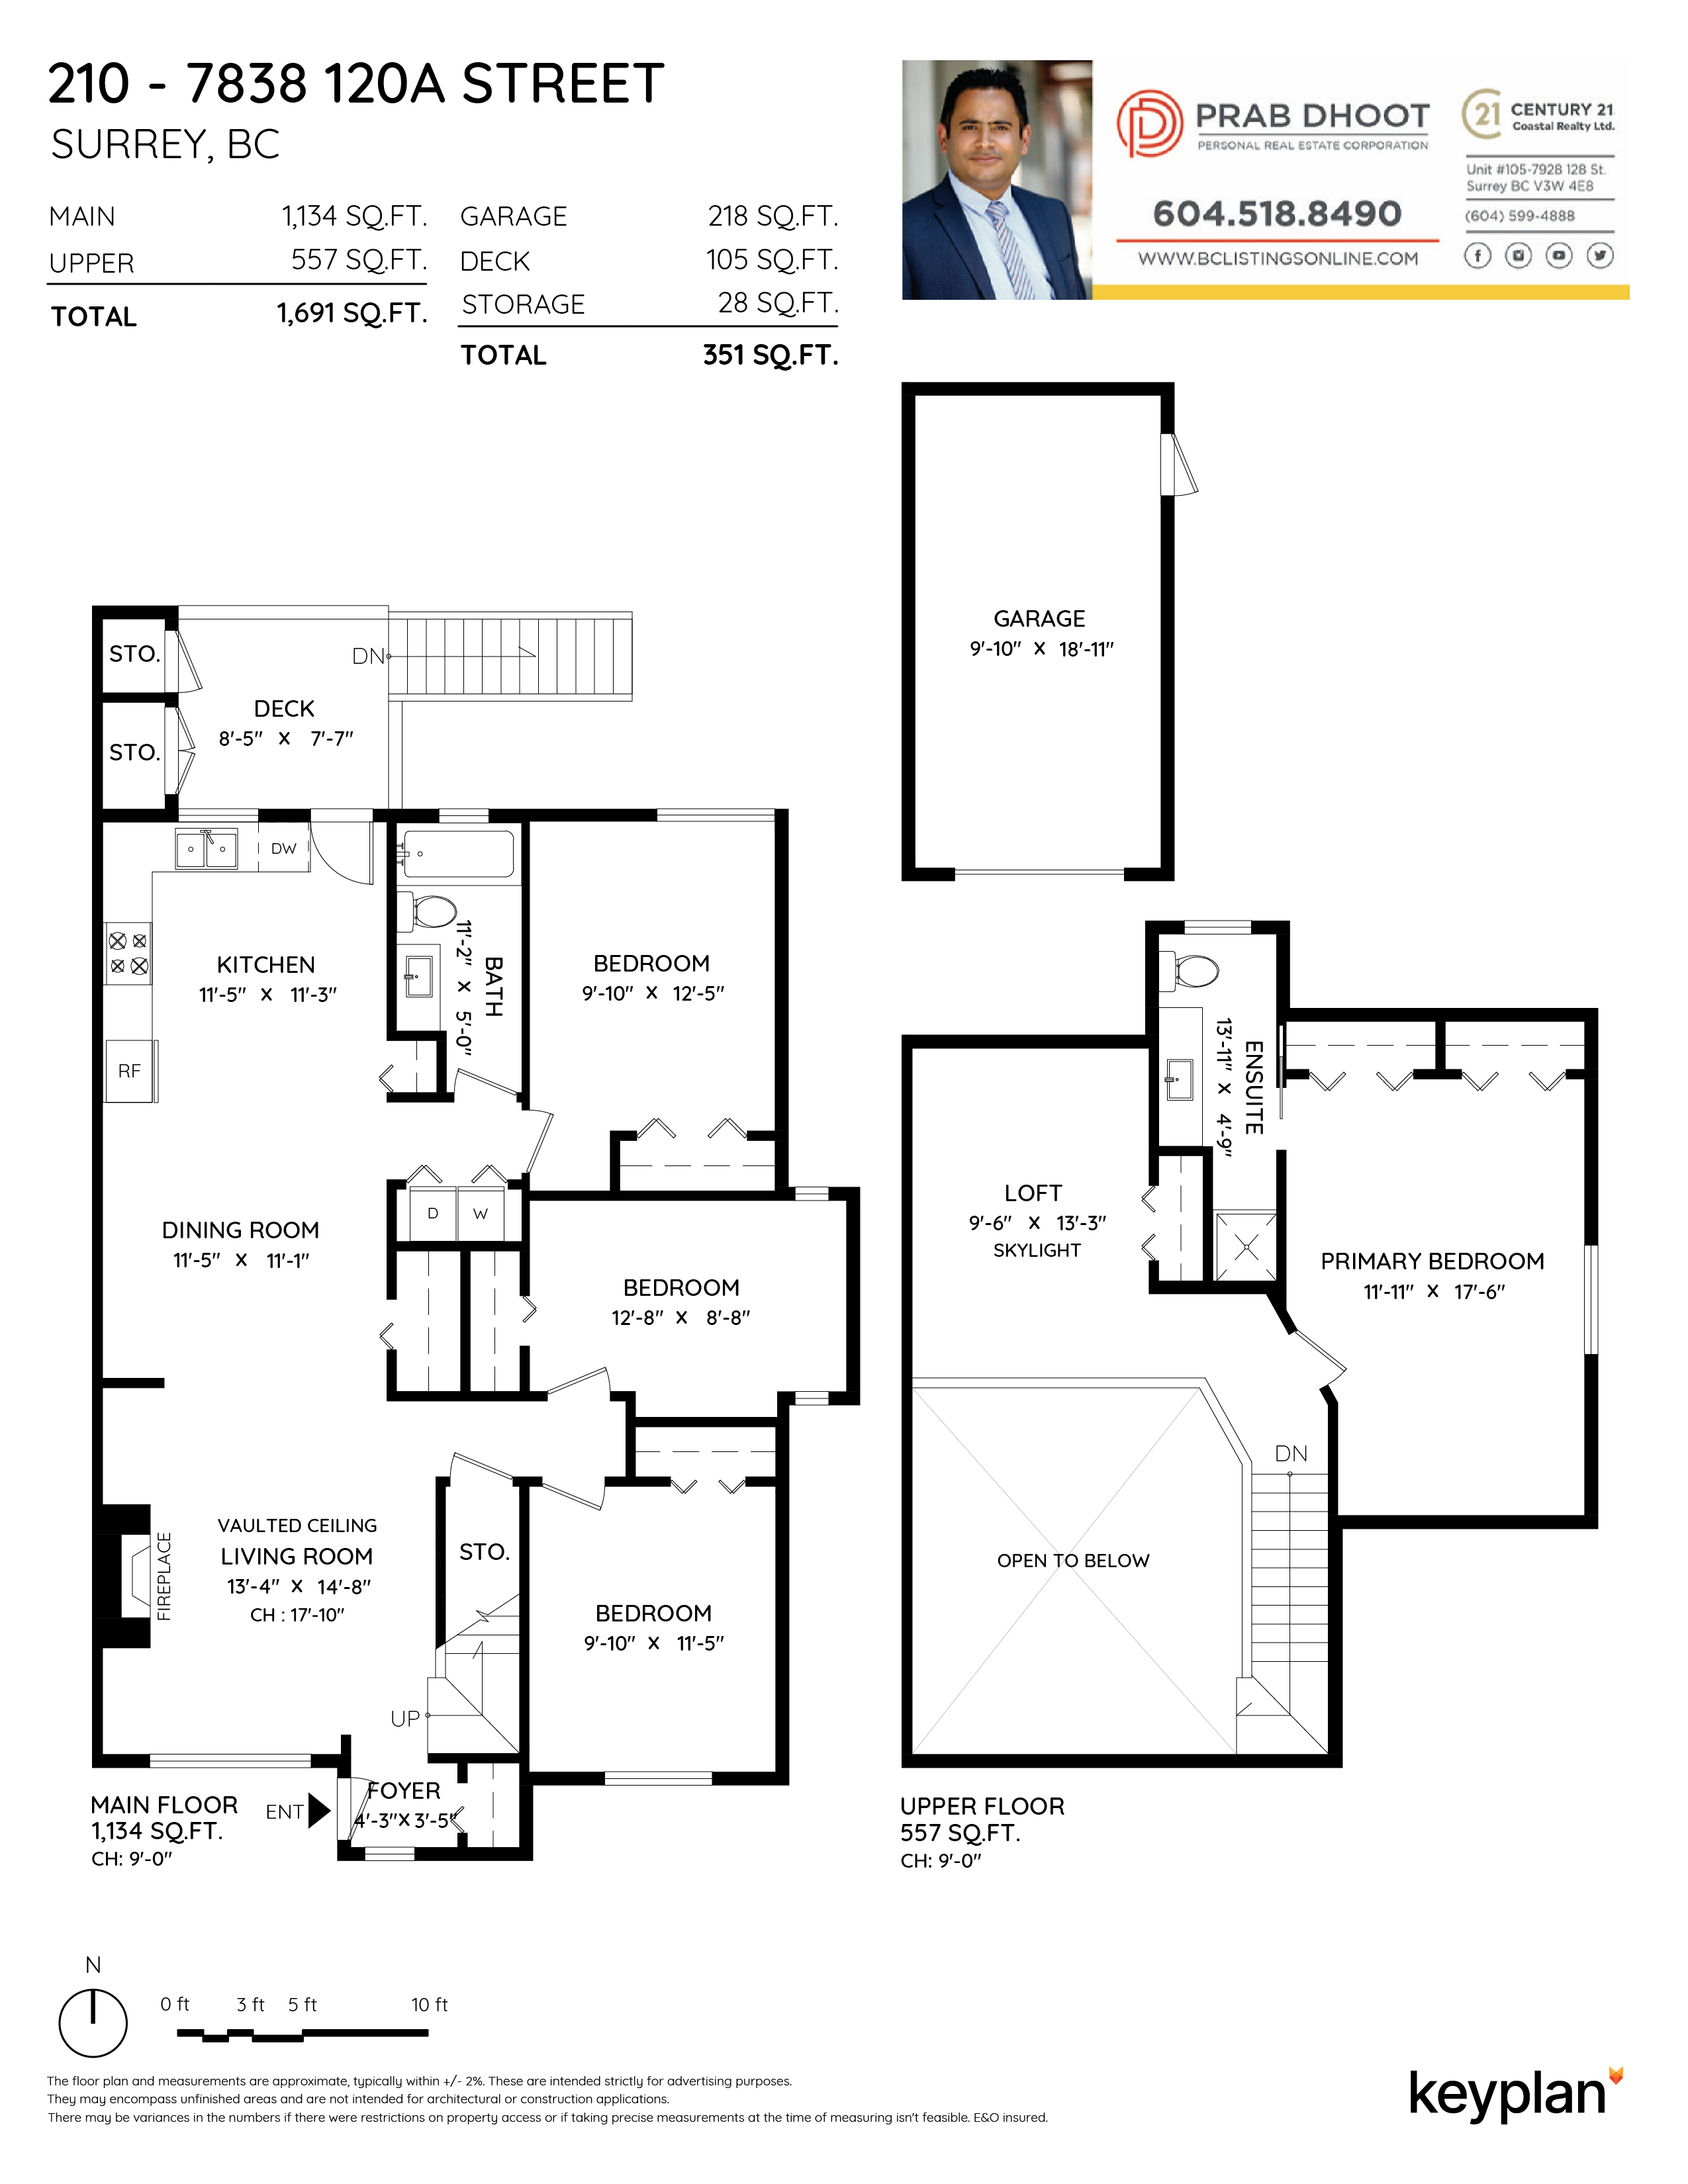 Prab Dhoot - Unit 210 - 7838 120A Street, Surrey, BC, Canada | Floor Plan 1